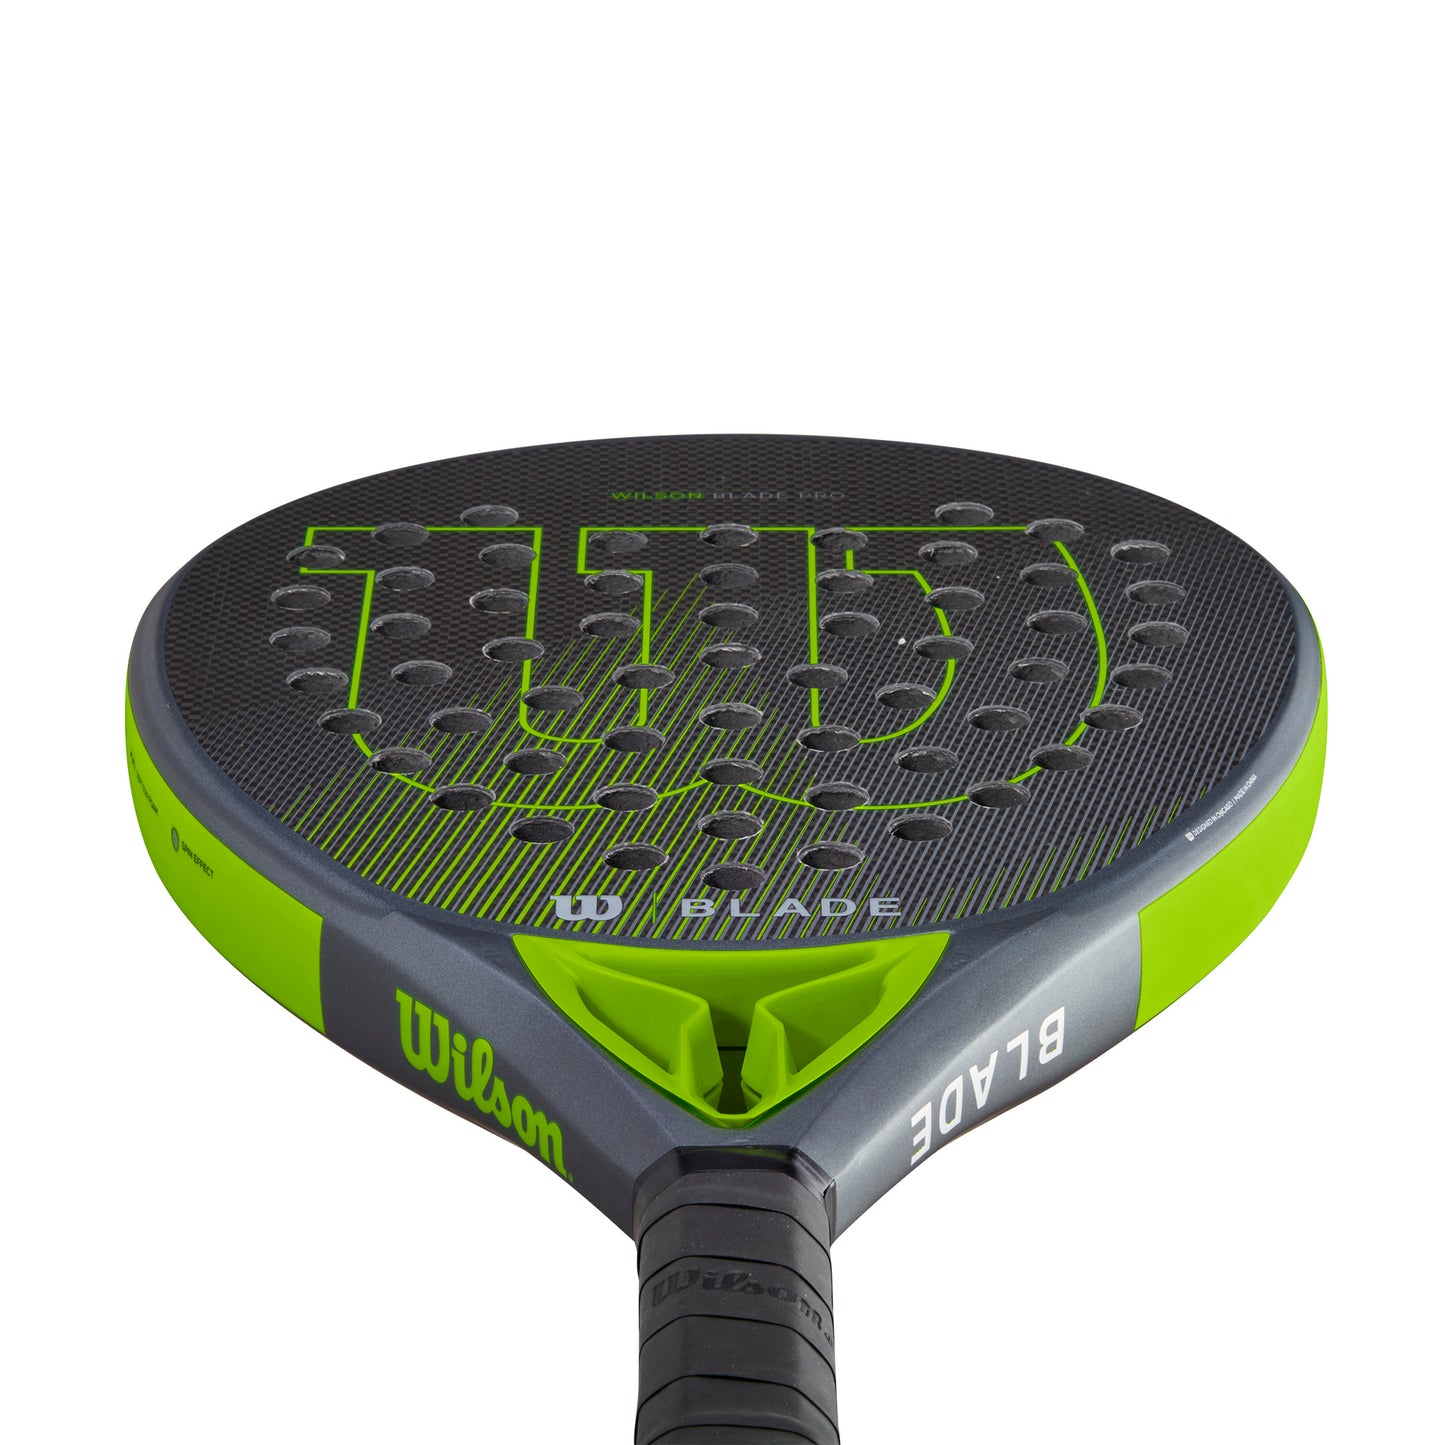 Wilson Blade Pro v2 Padel Racket, Black/Neon Green